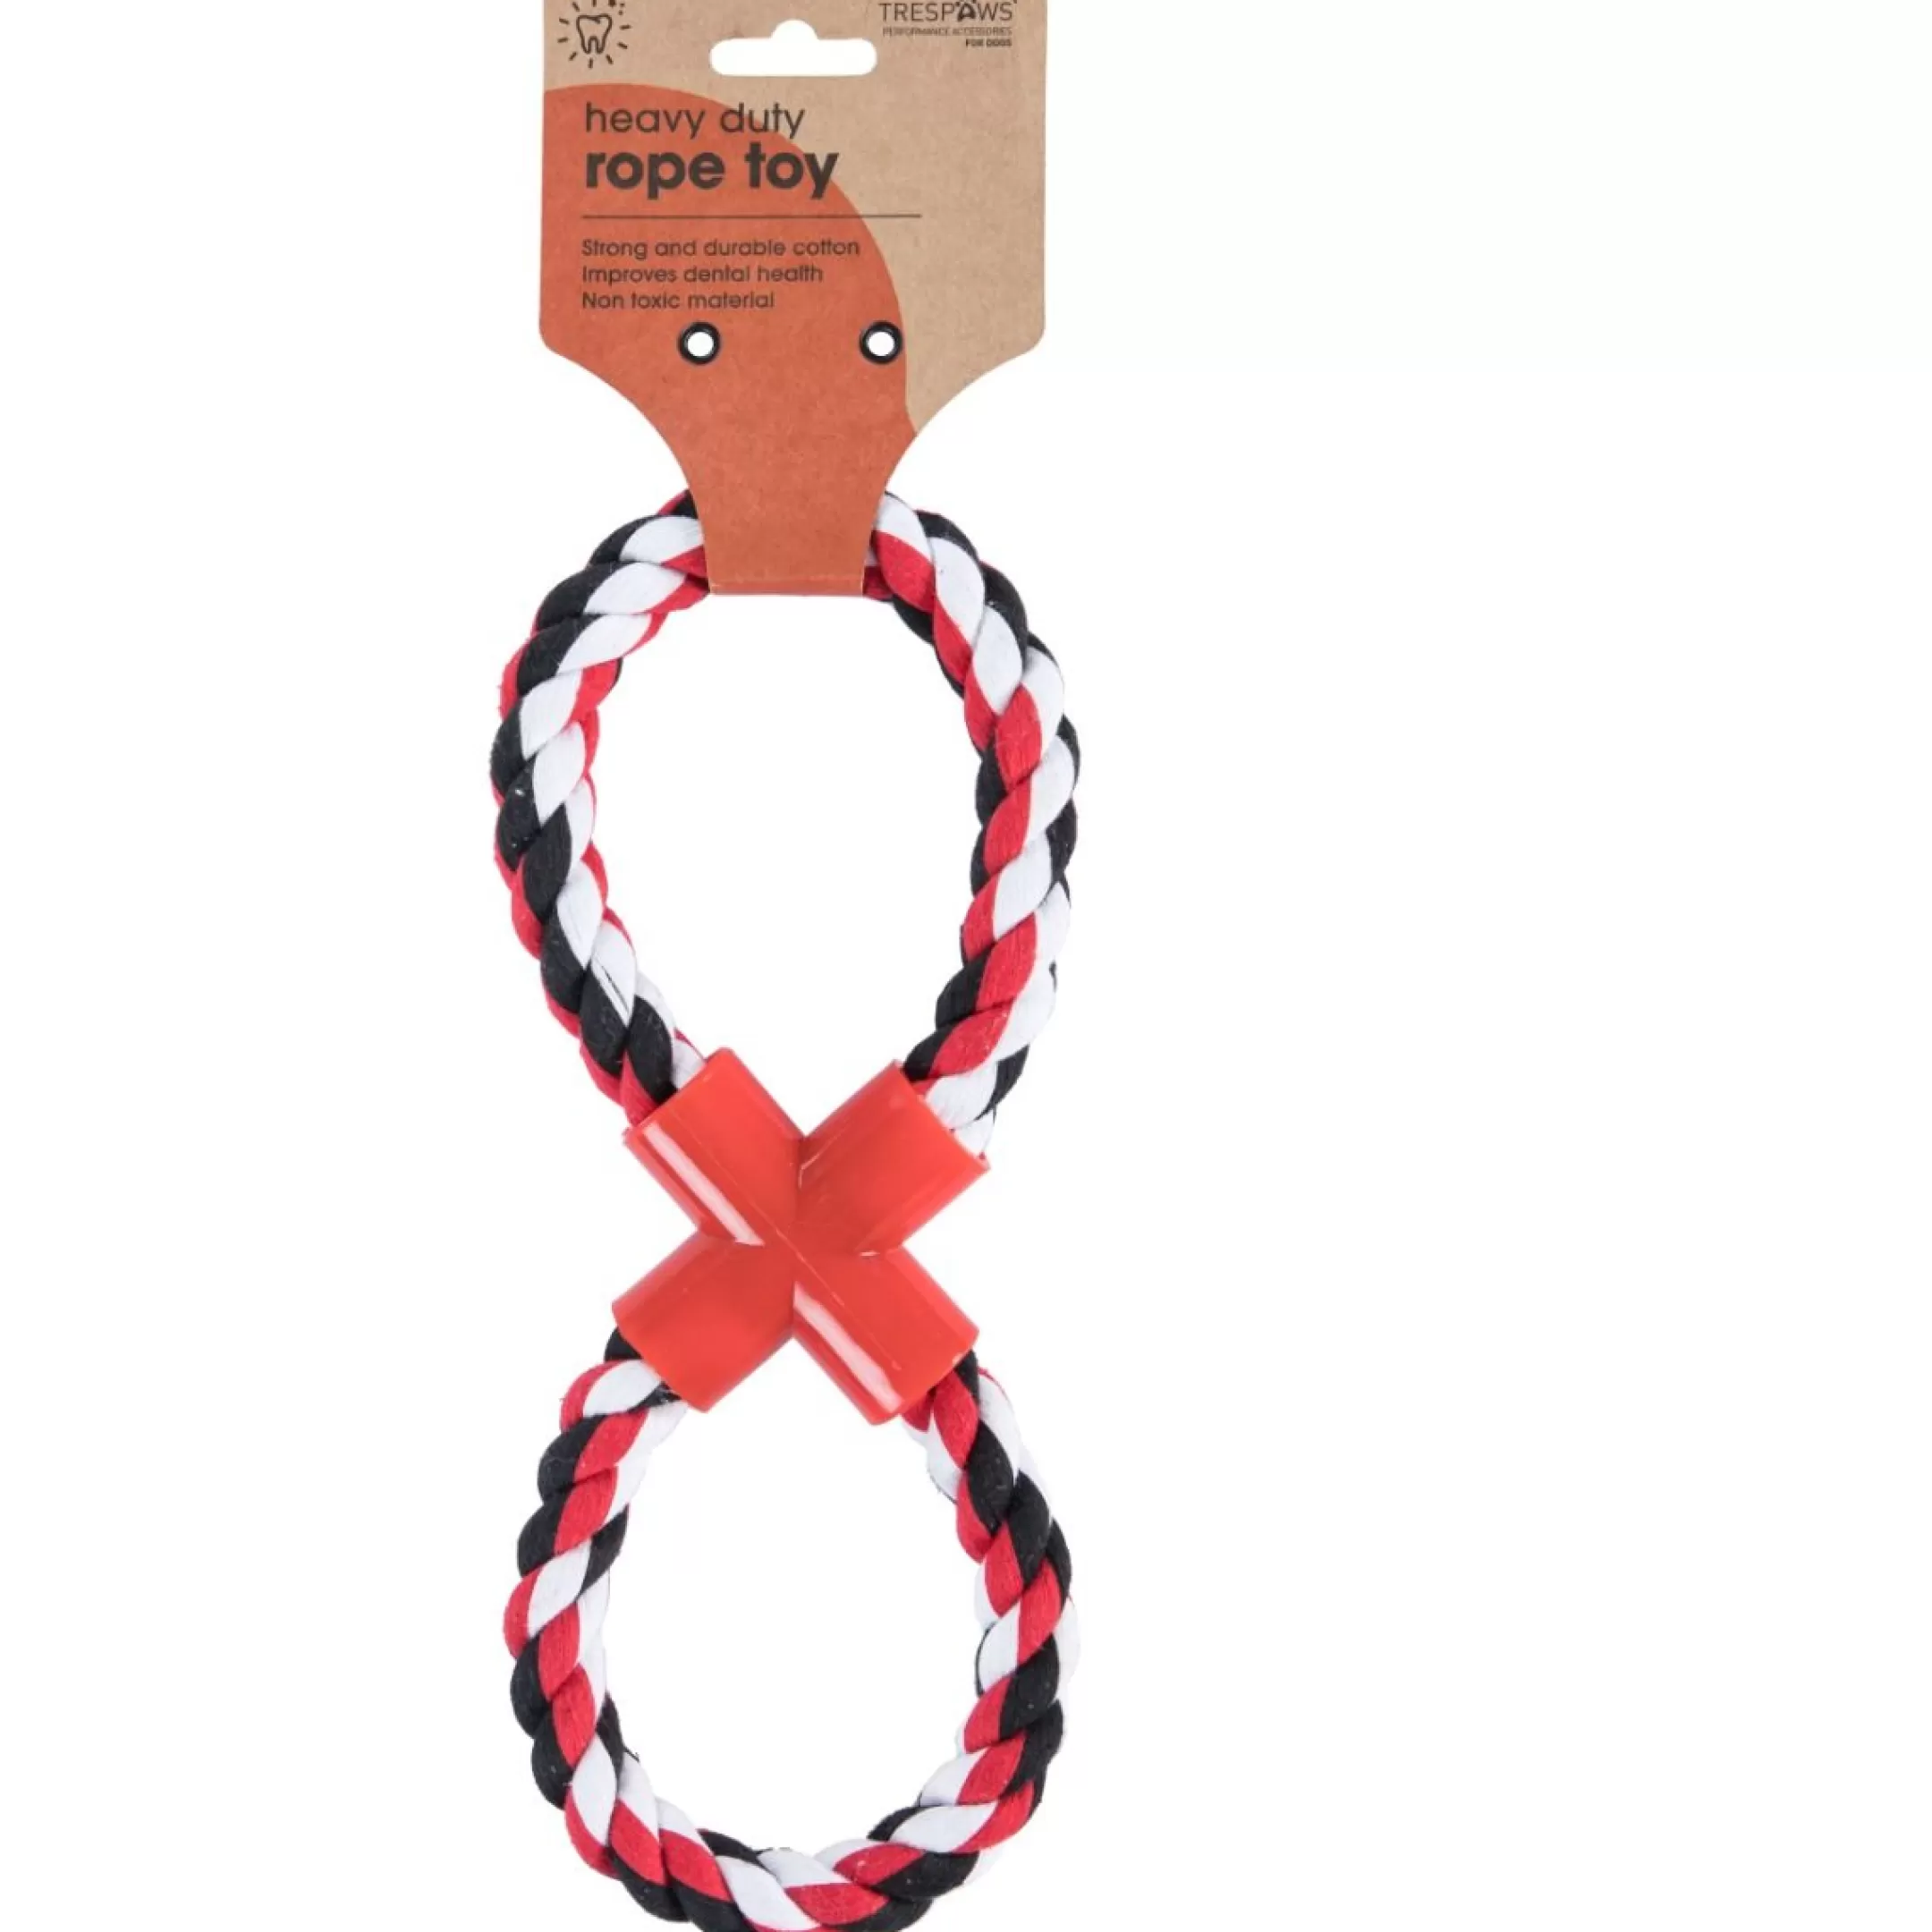 Trespaws Rope Dog Toy Hooper | Trespass Hot